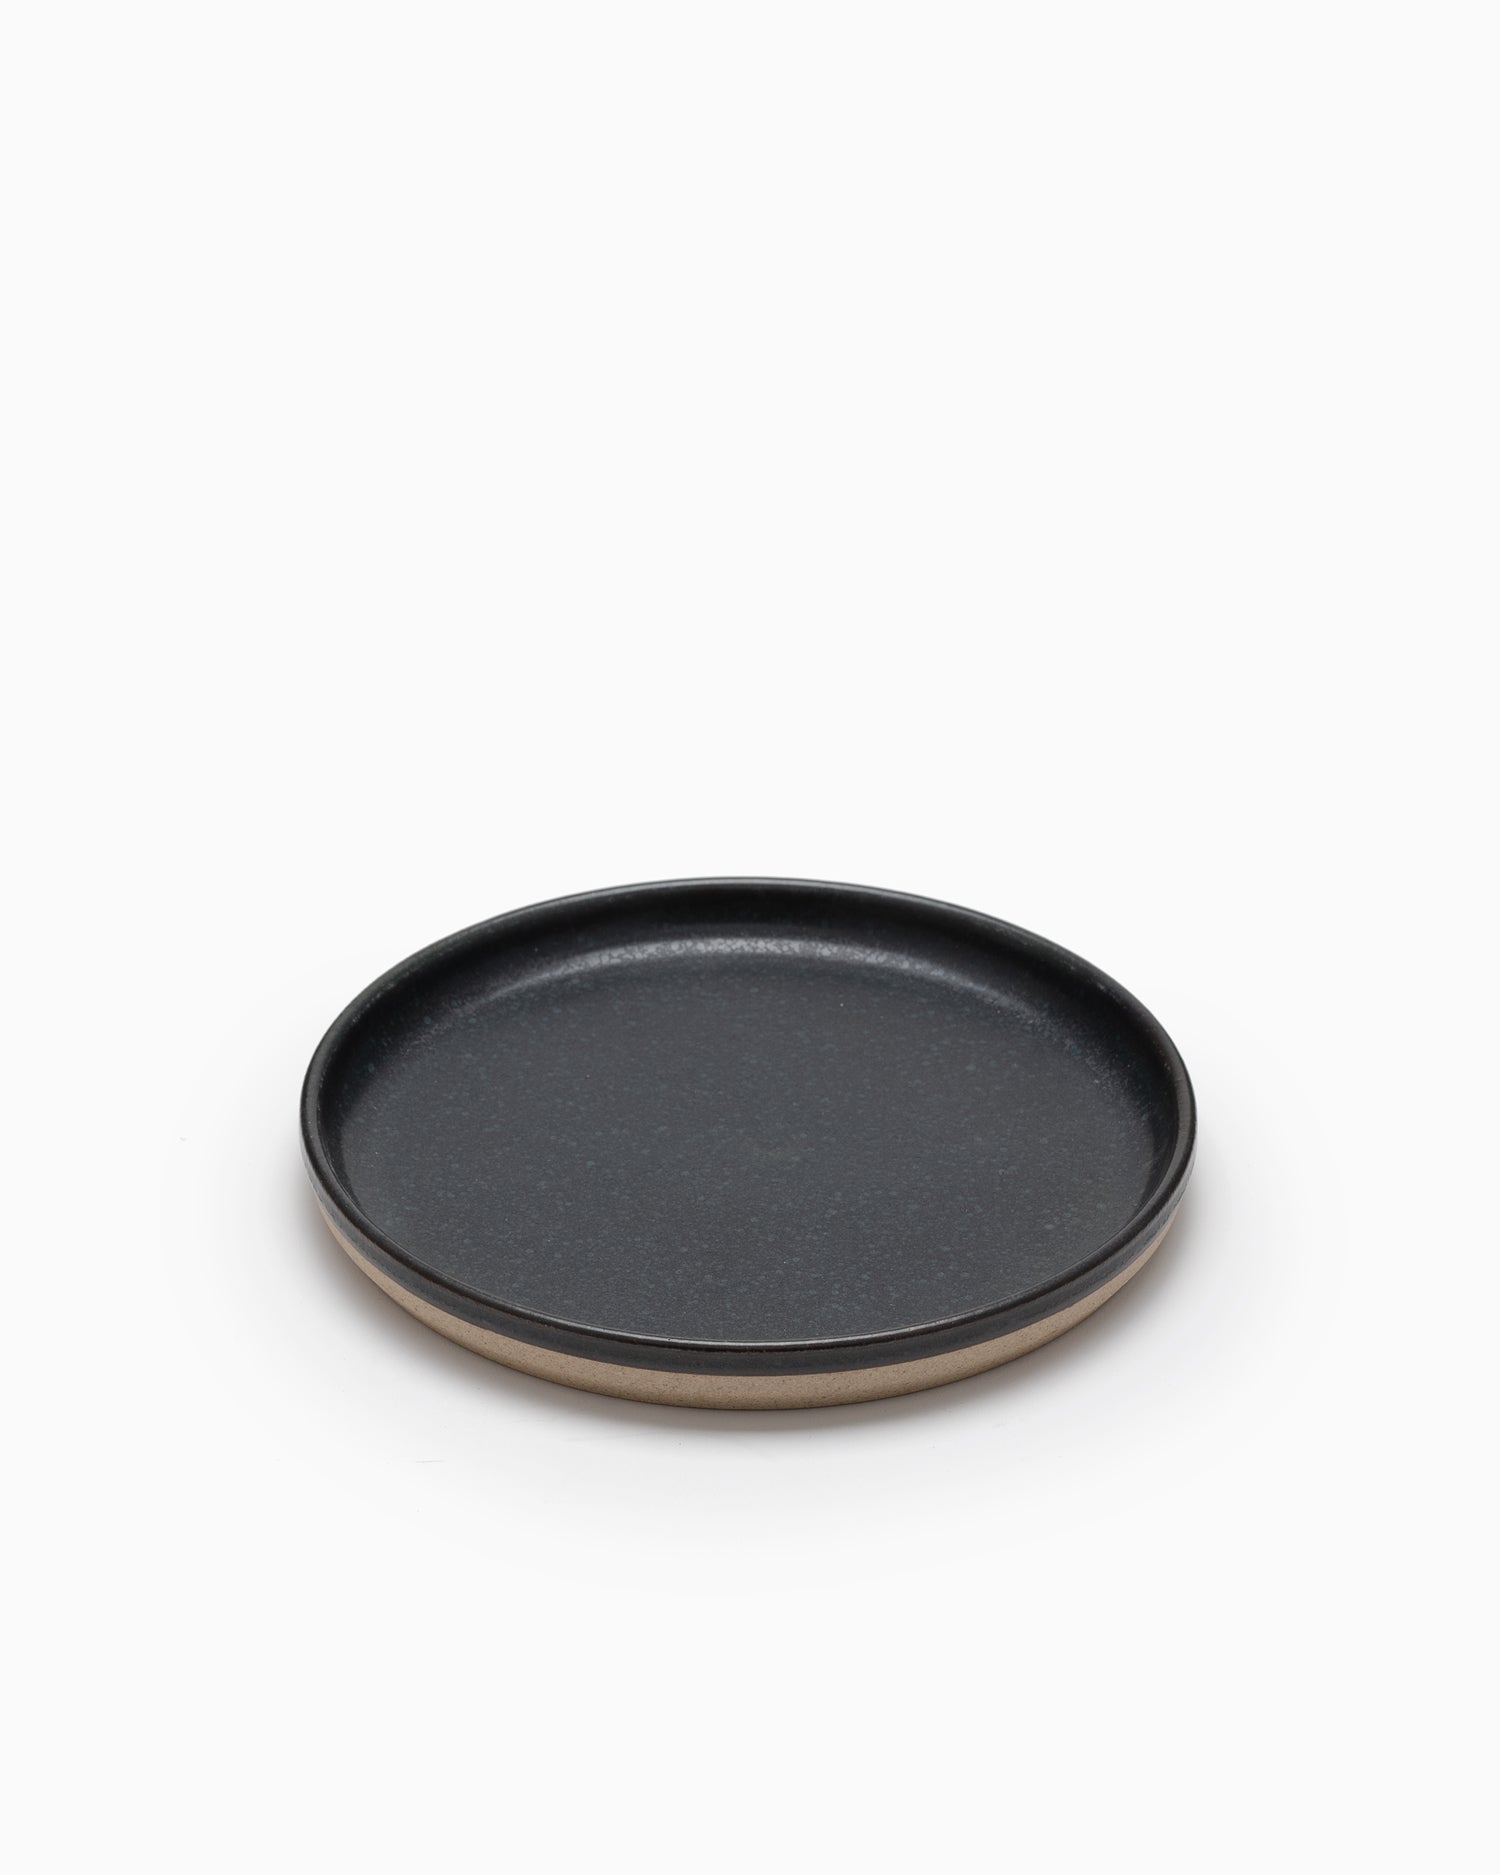 CLK-151 Small Plate - Black